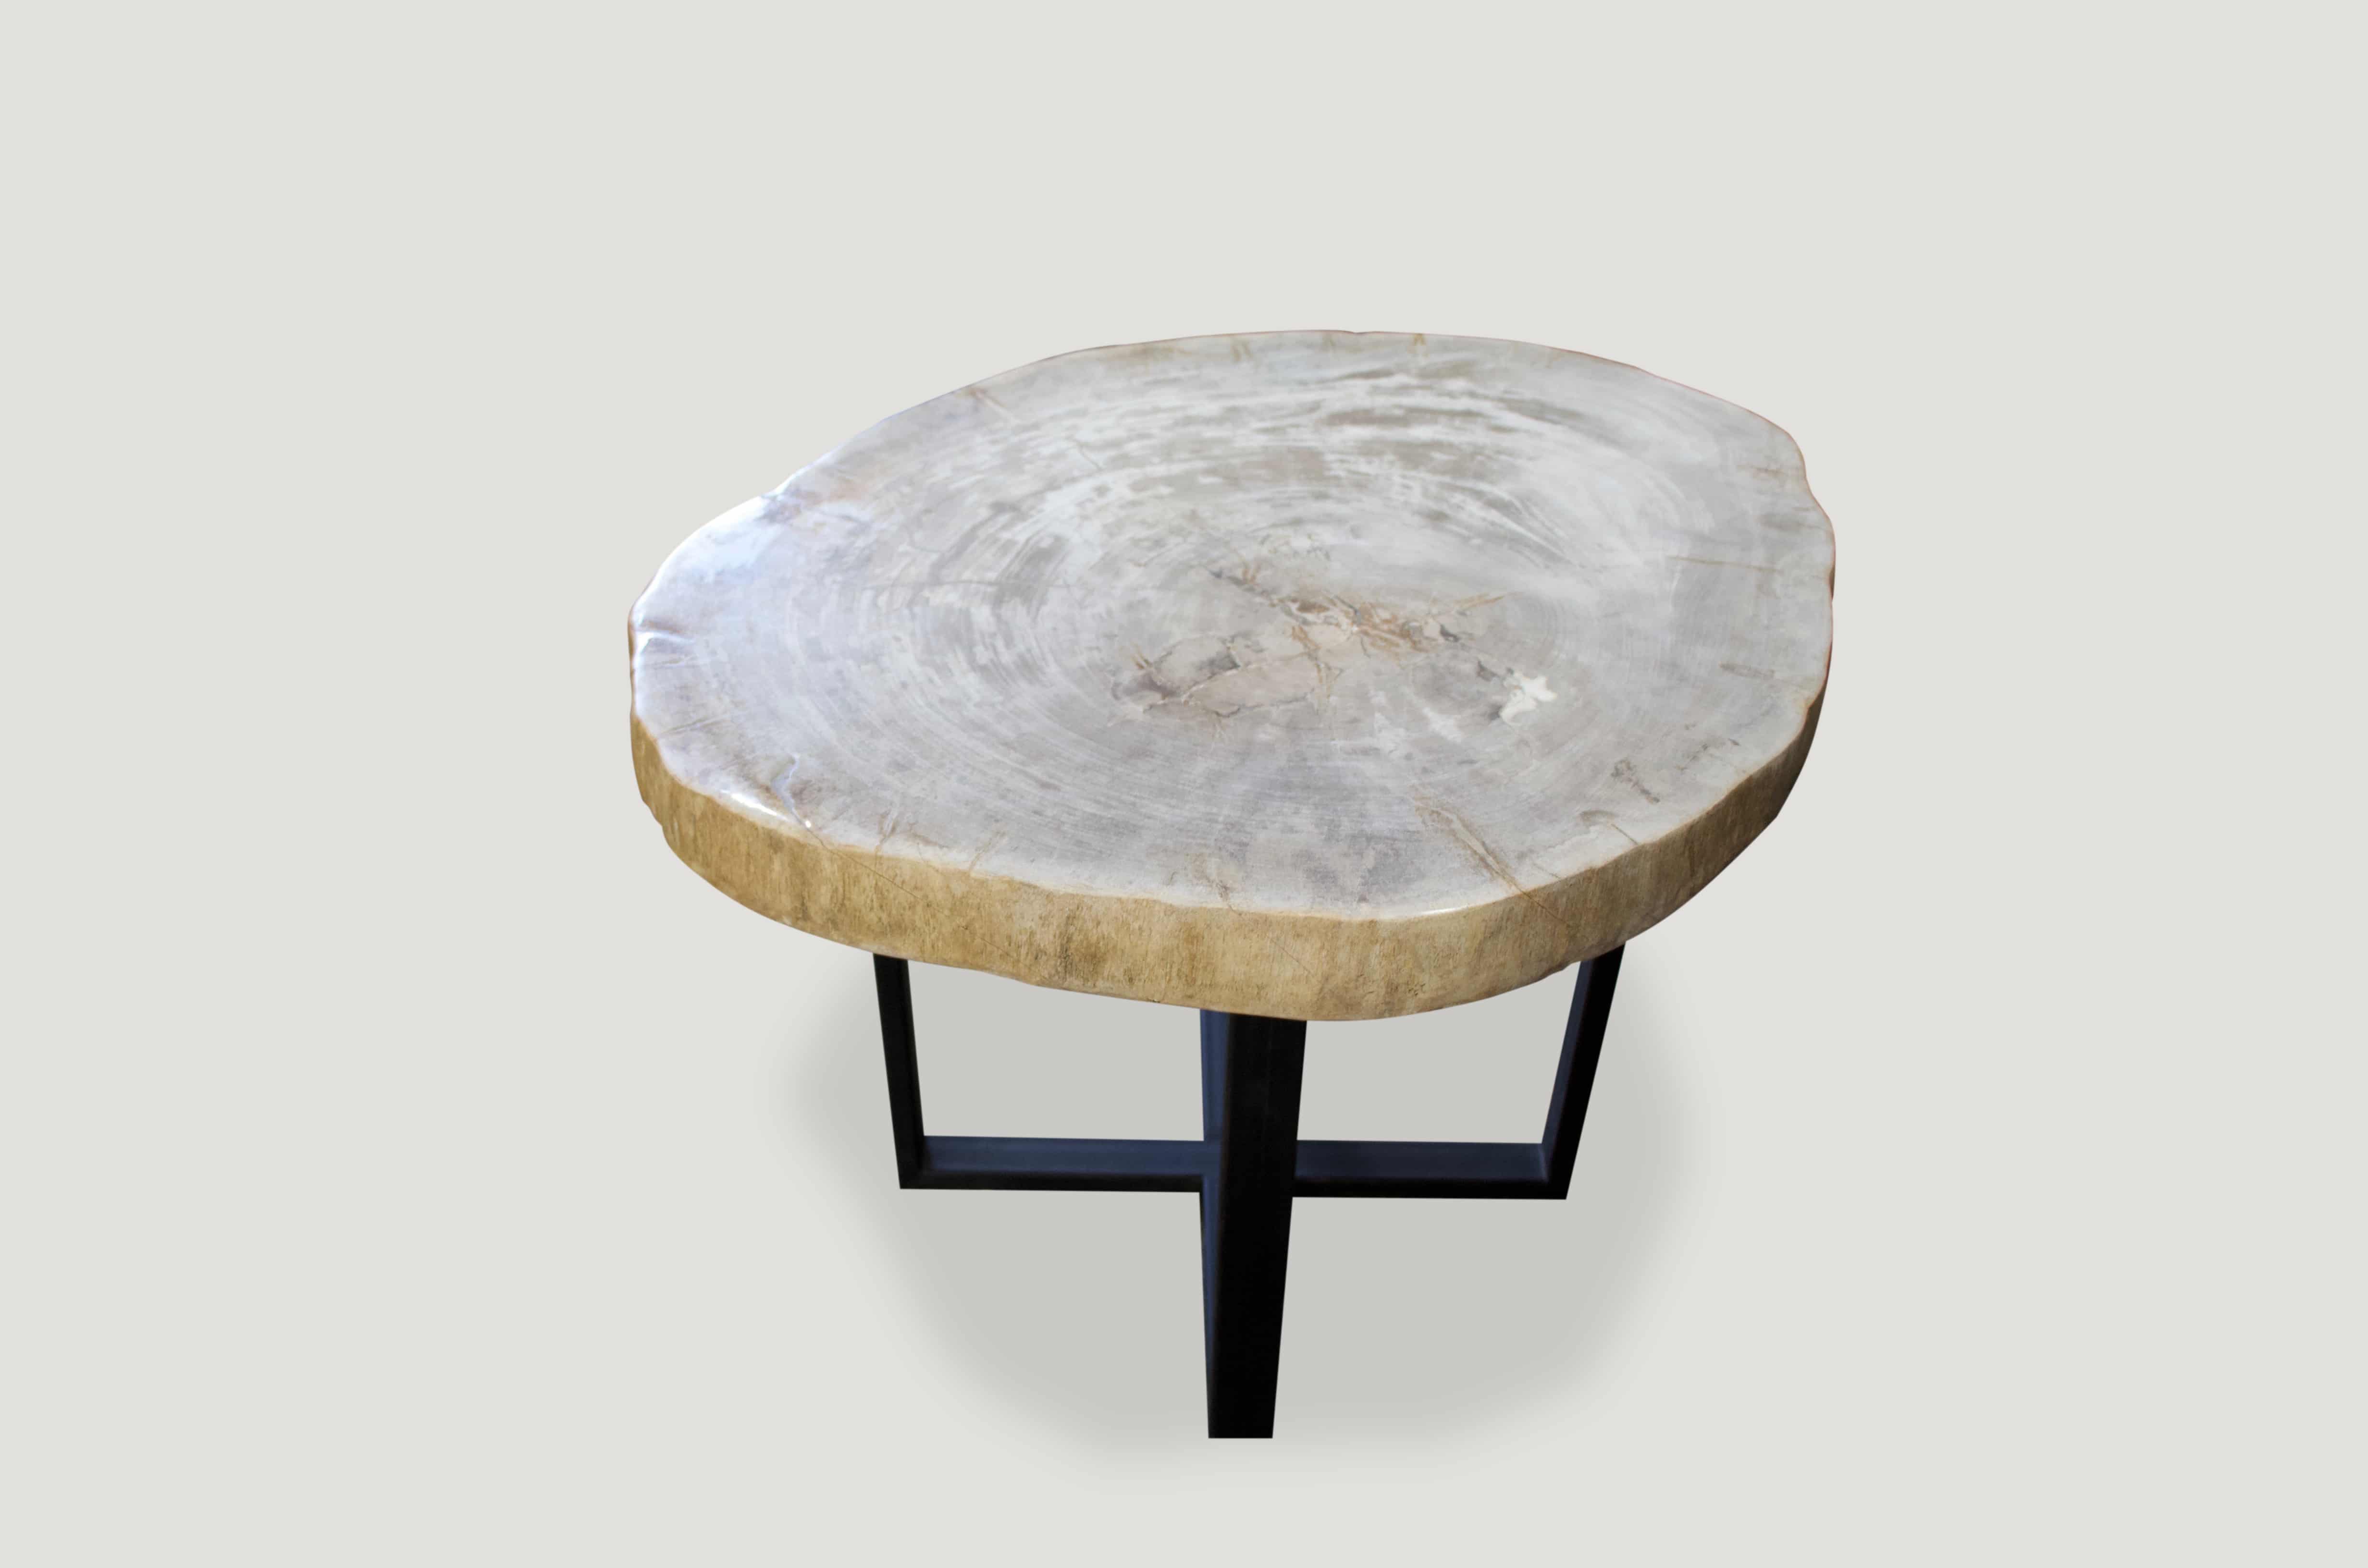 High quality petrified wood 2″ slab top side table.